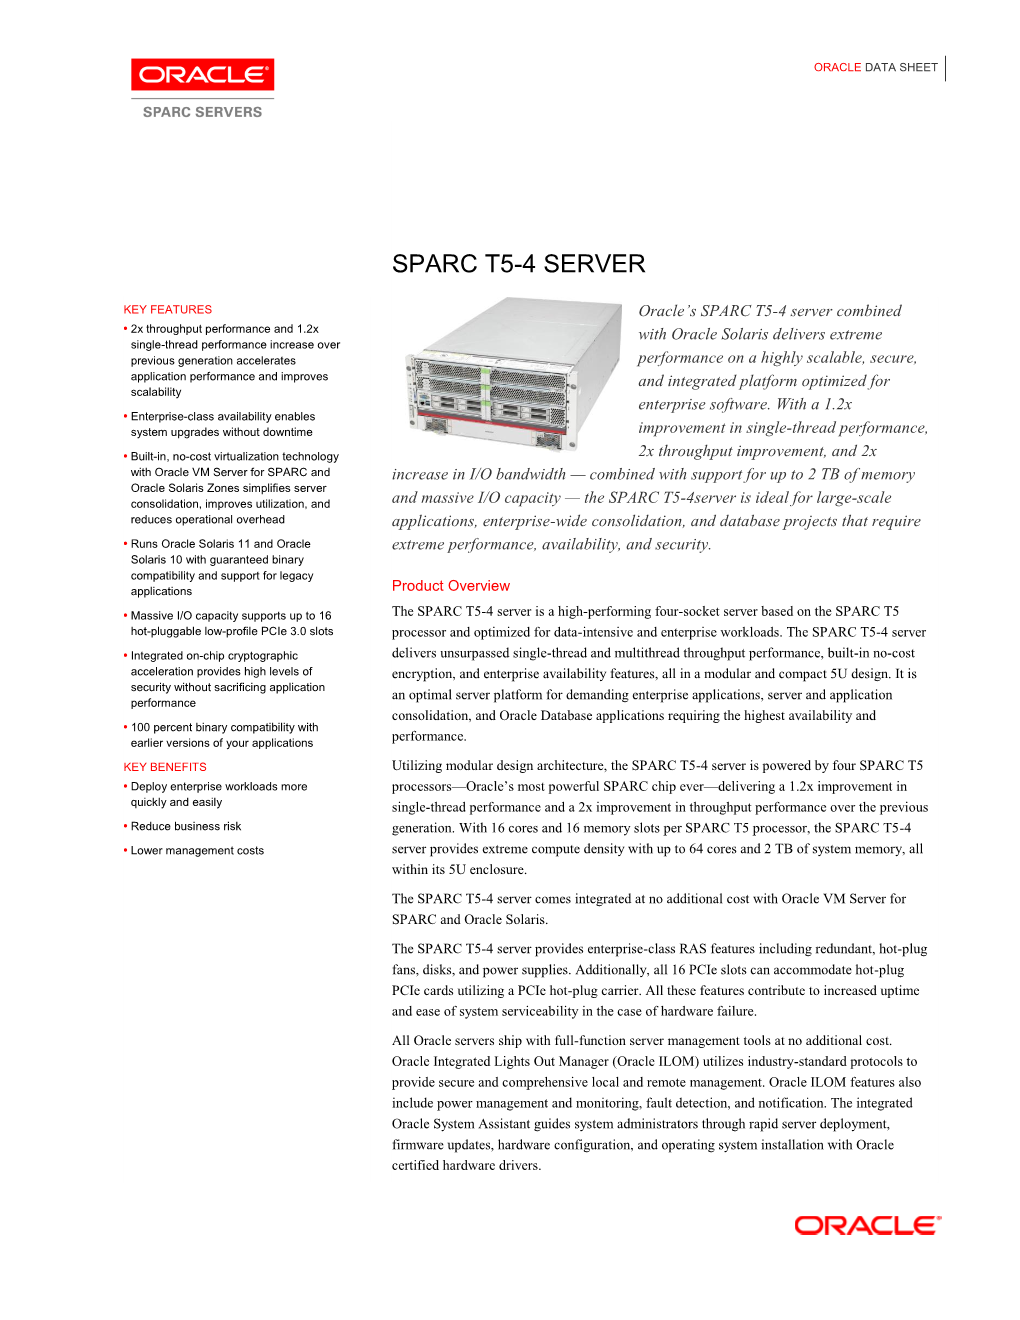 SPARC T5-4 Server Data Sheet